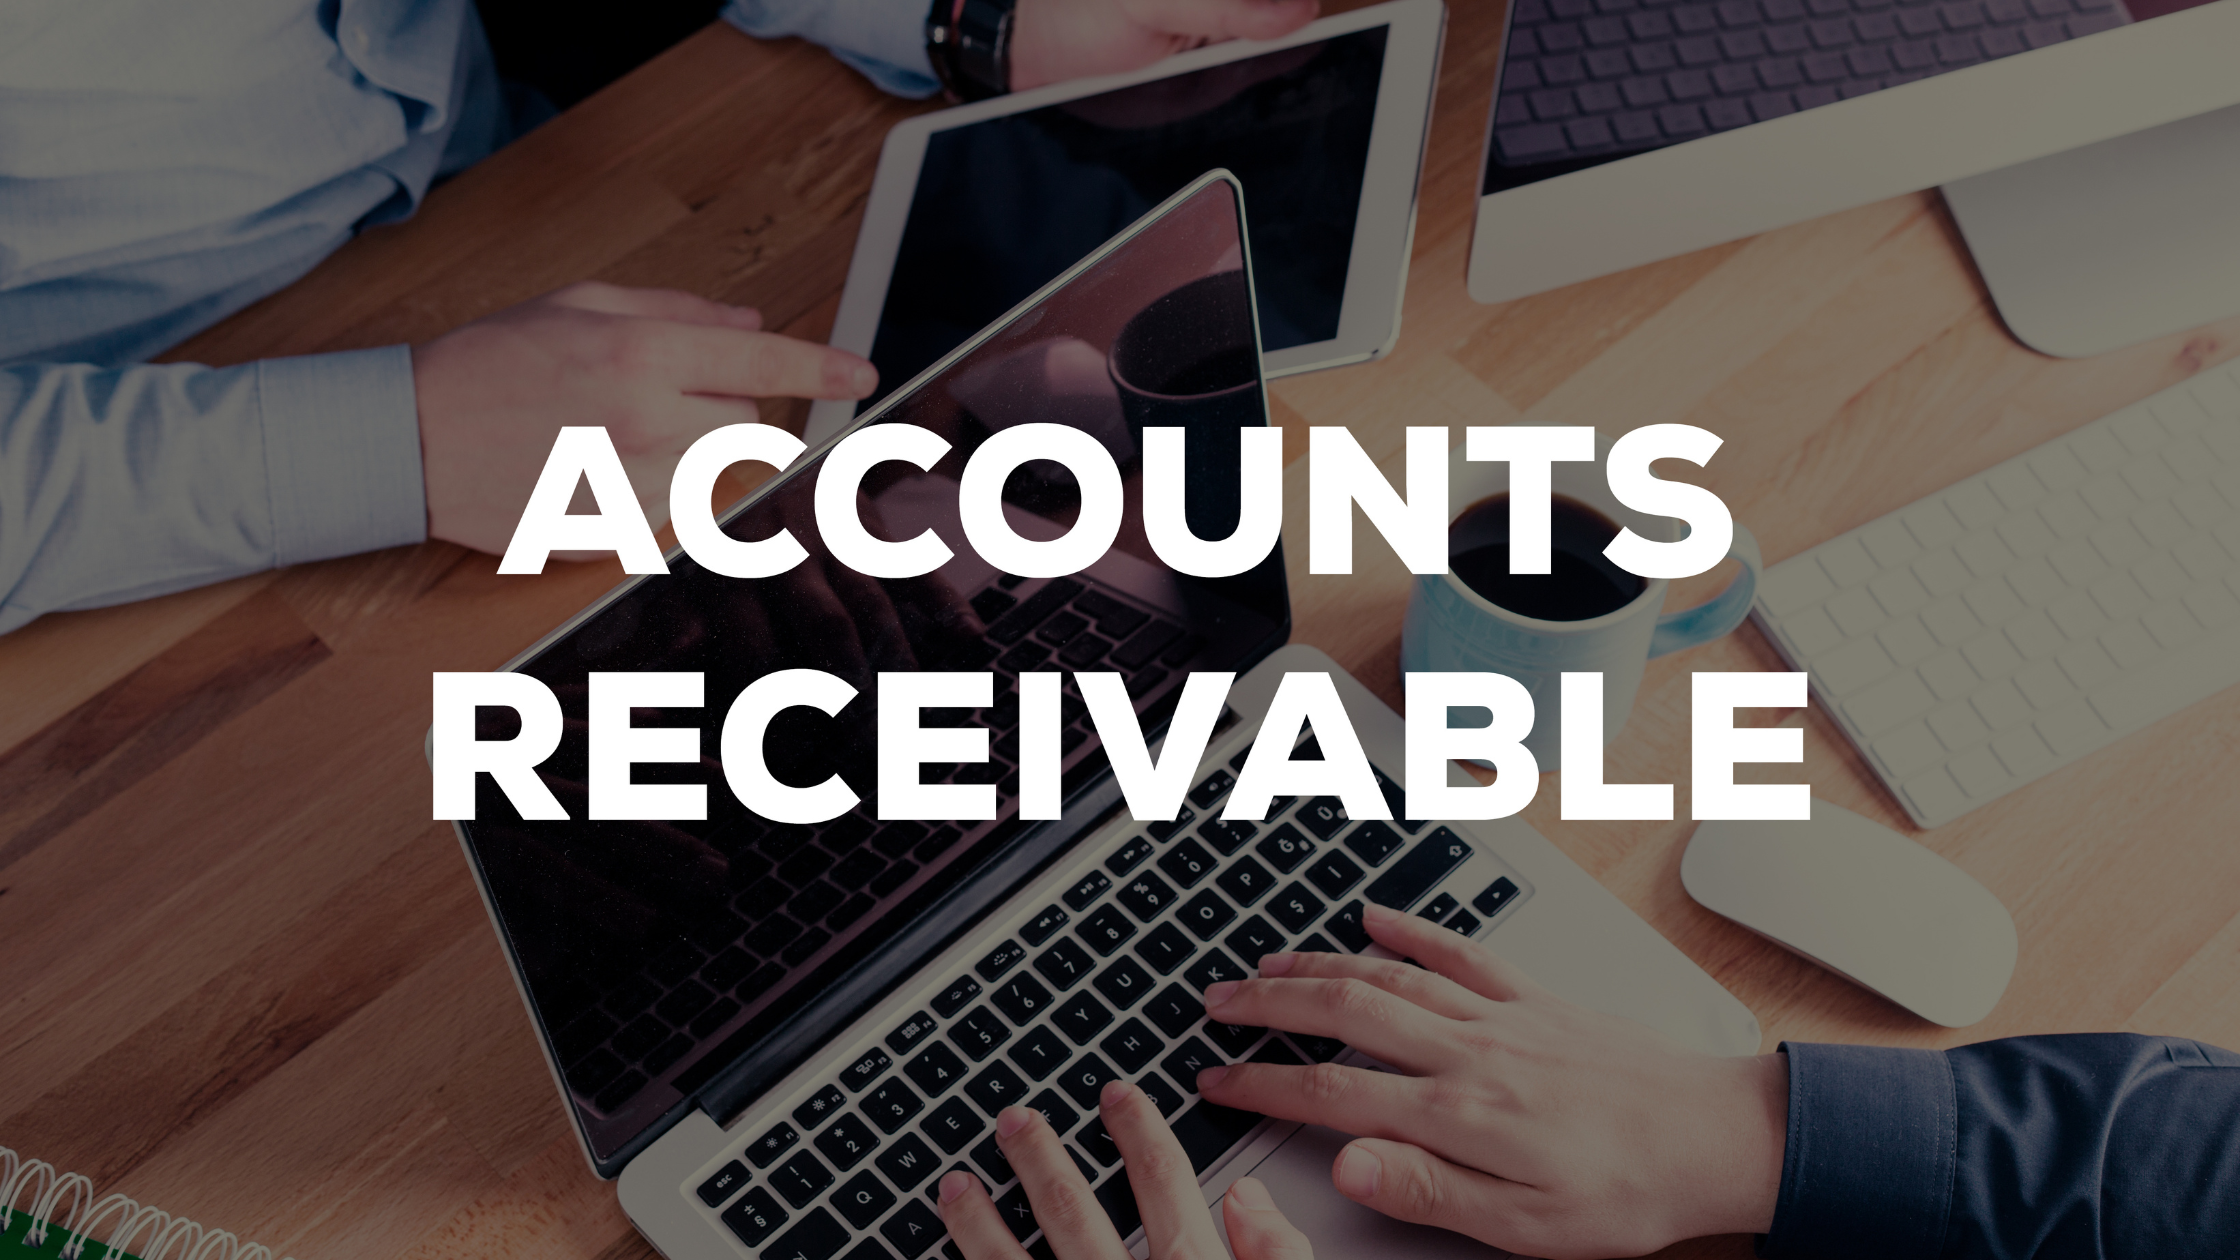 accounts receivable process